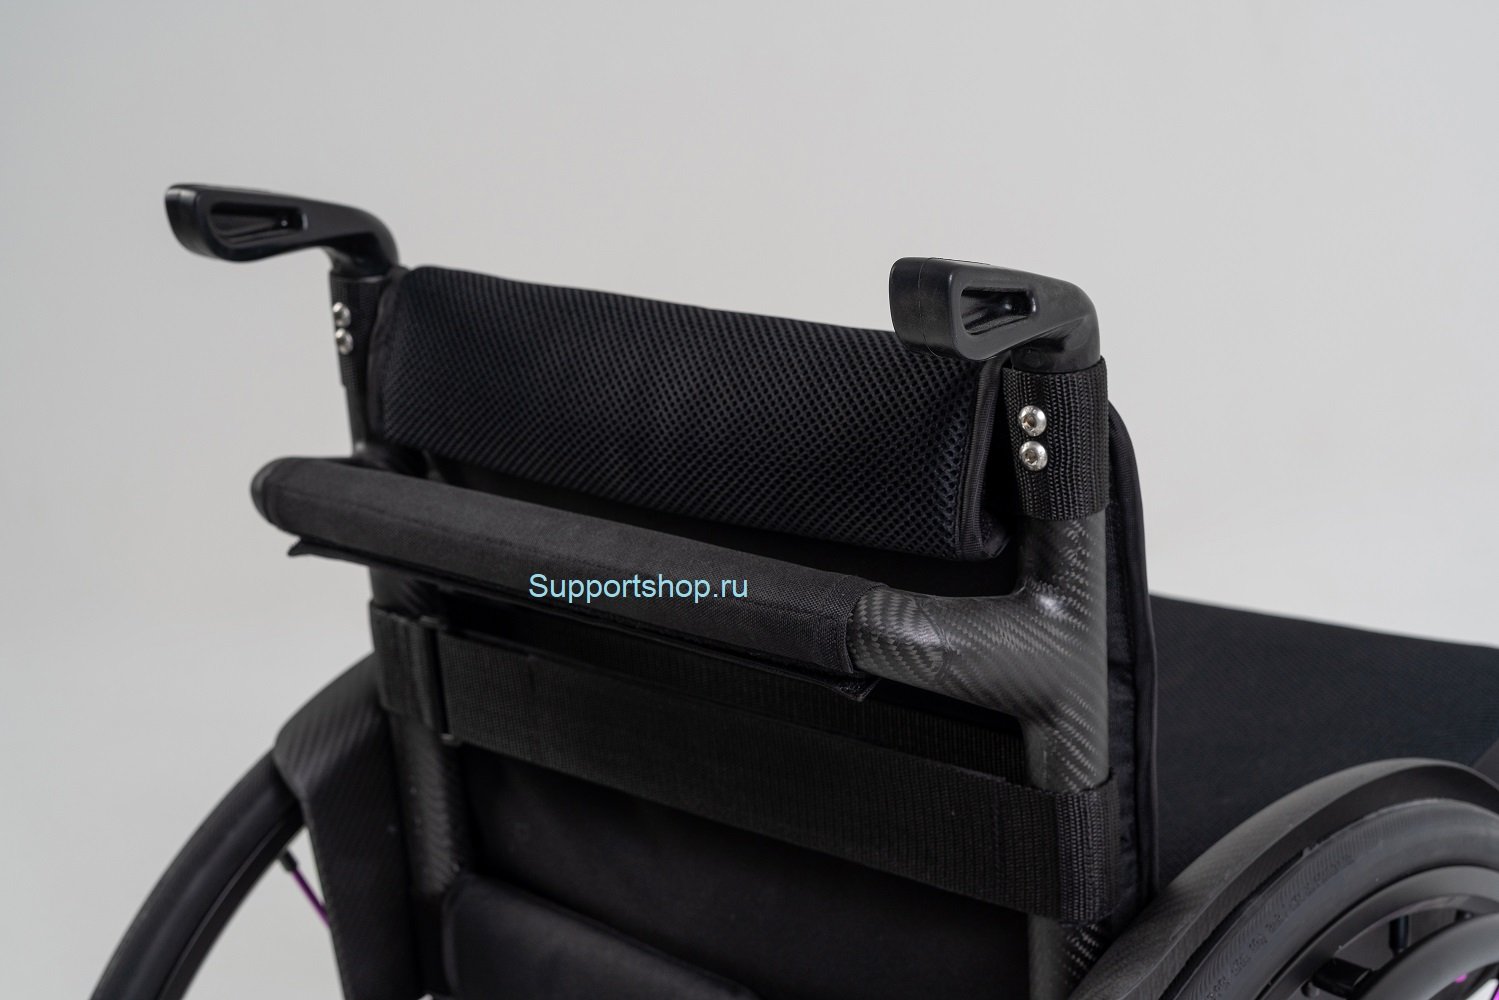 Легкая кресло-коляска активного типа iCross Active Trip